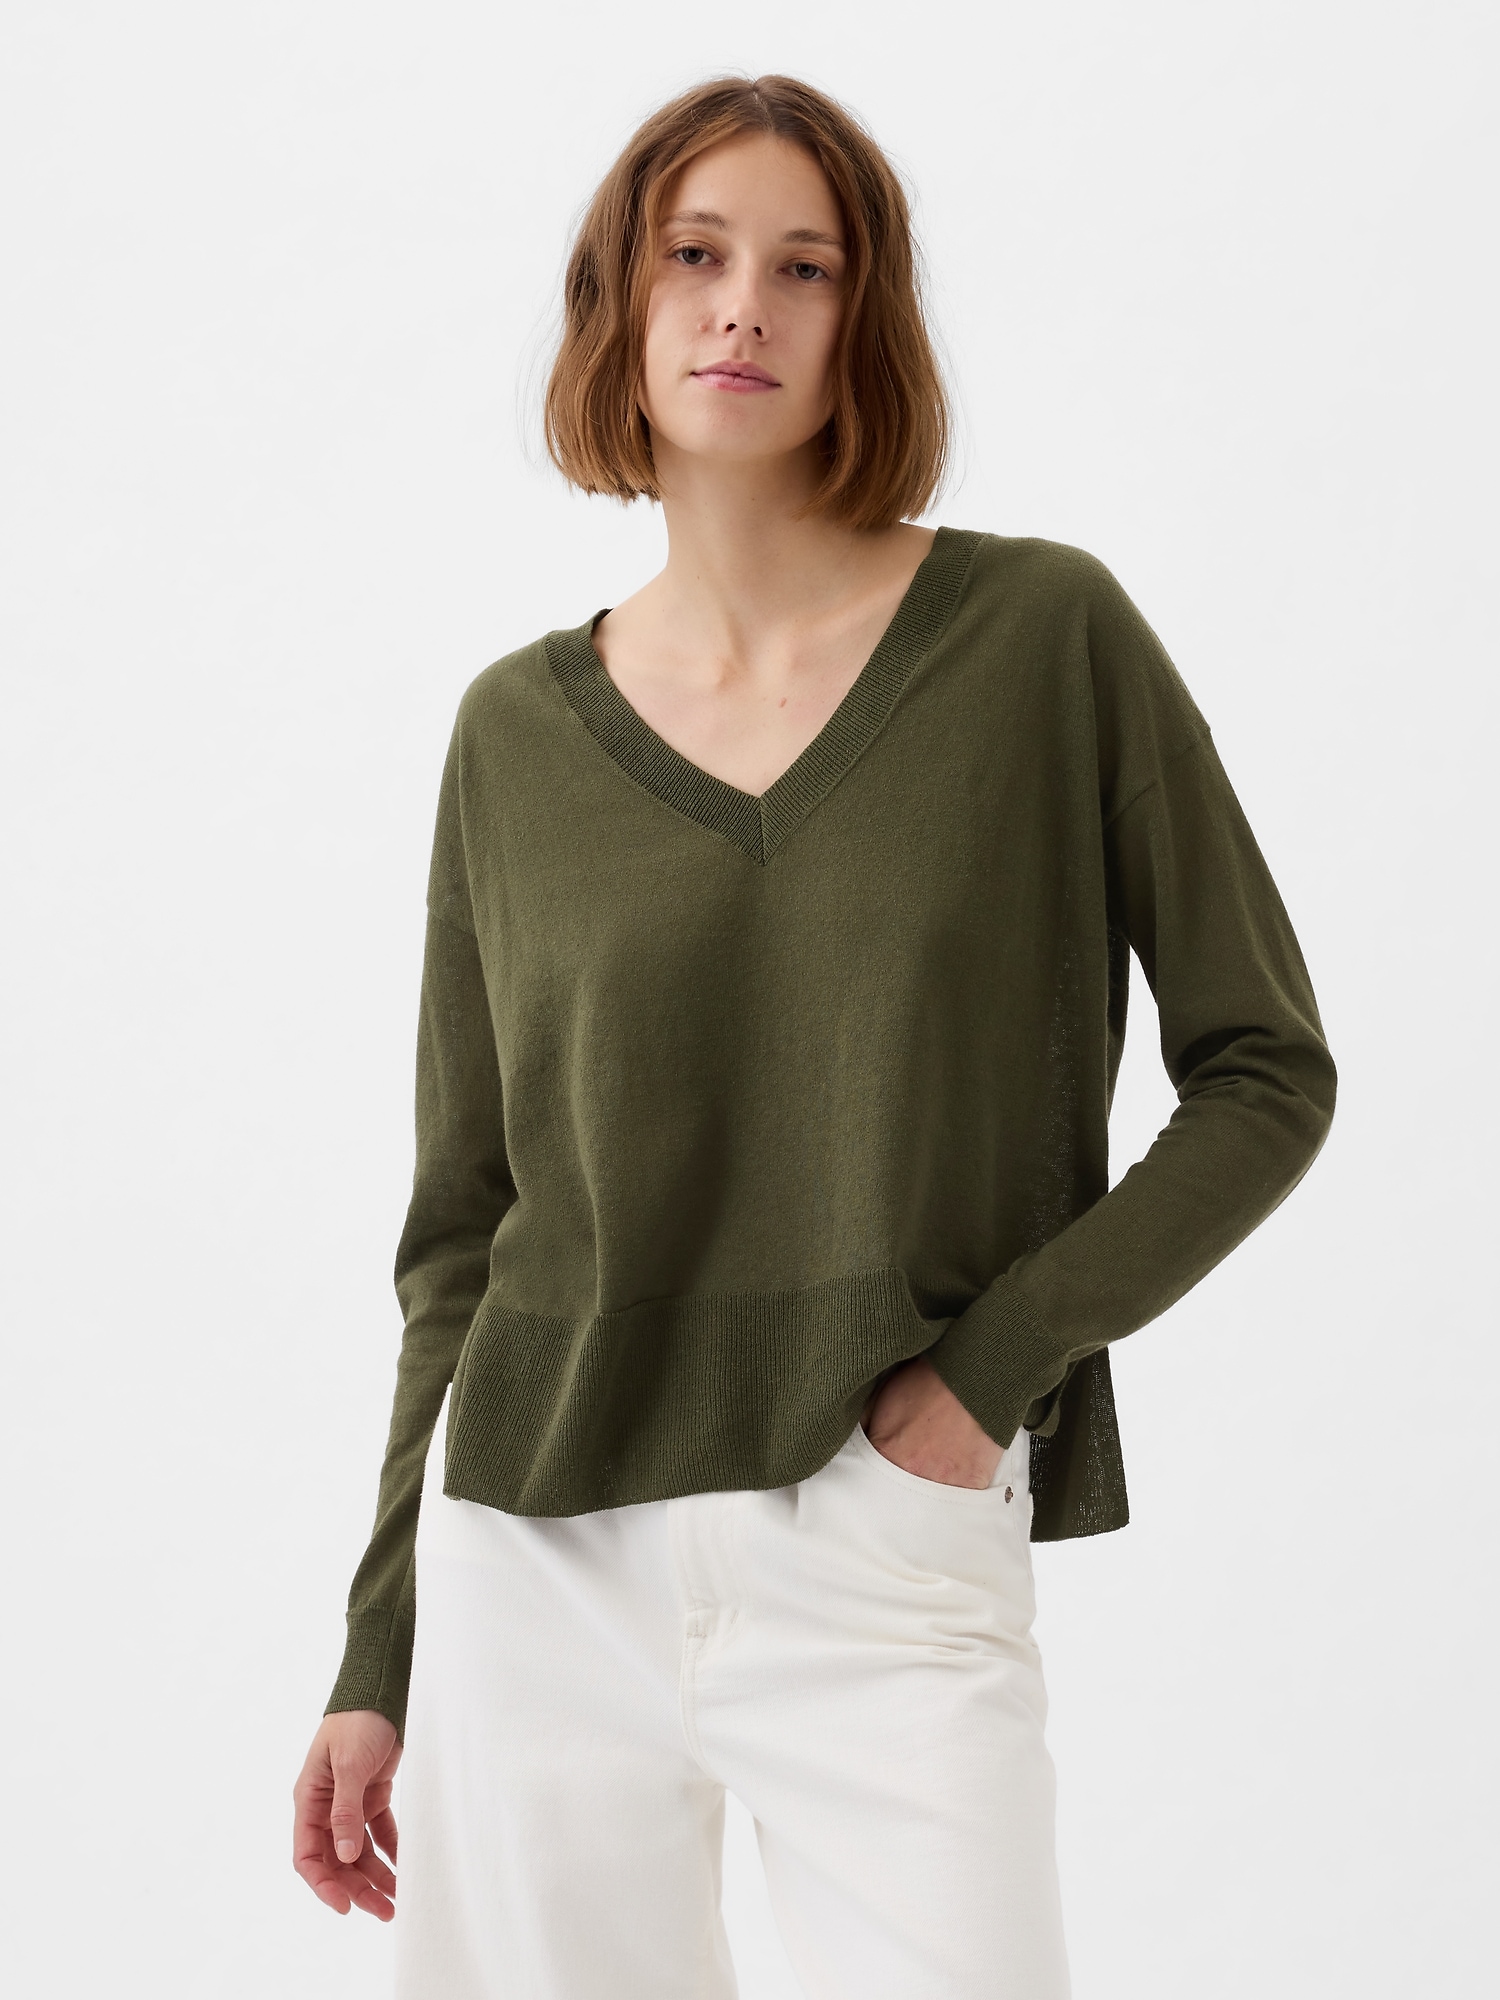 GAP Linen Sweater with Slits - Women